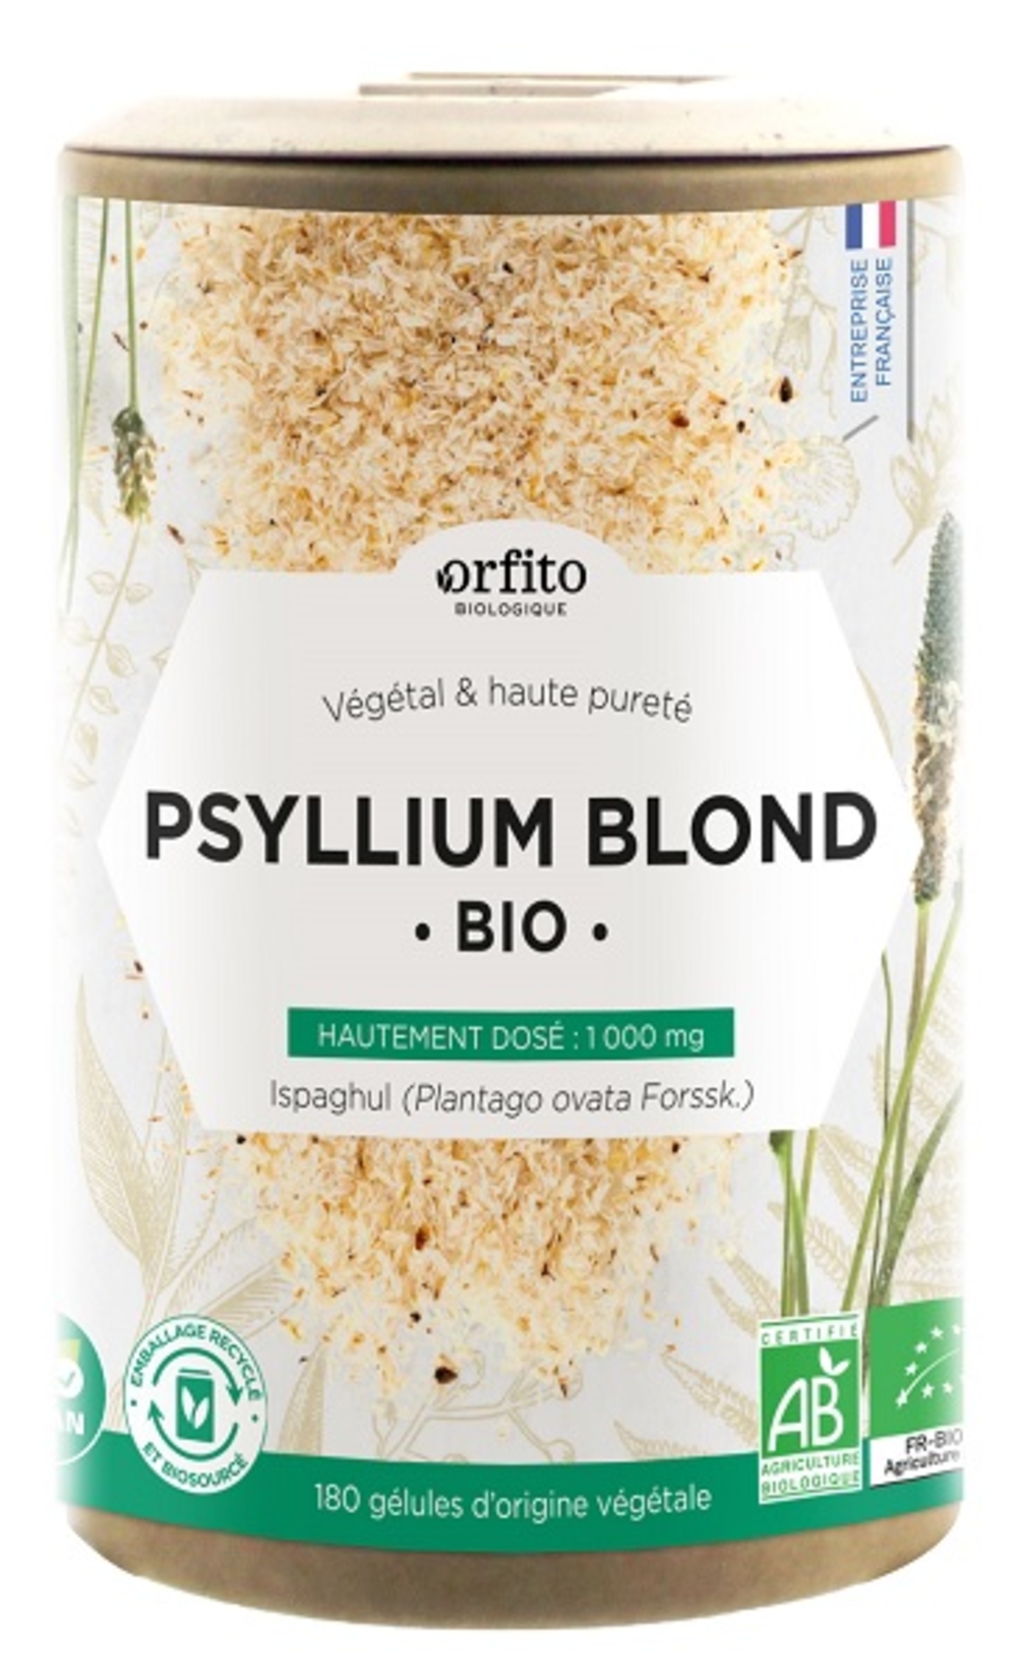 Psyllium blond Bio 1000 mg